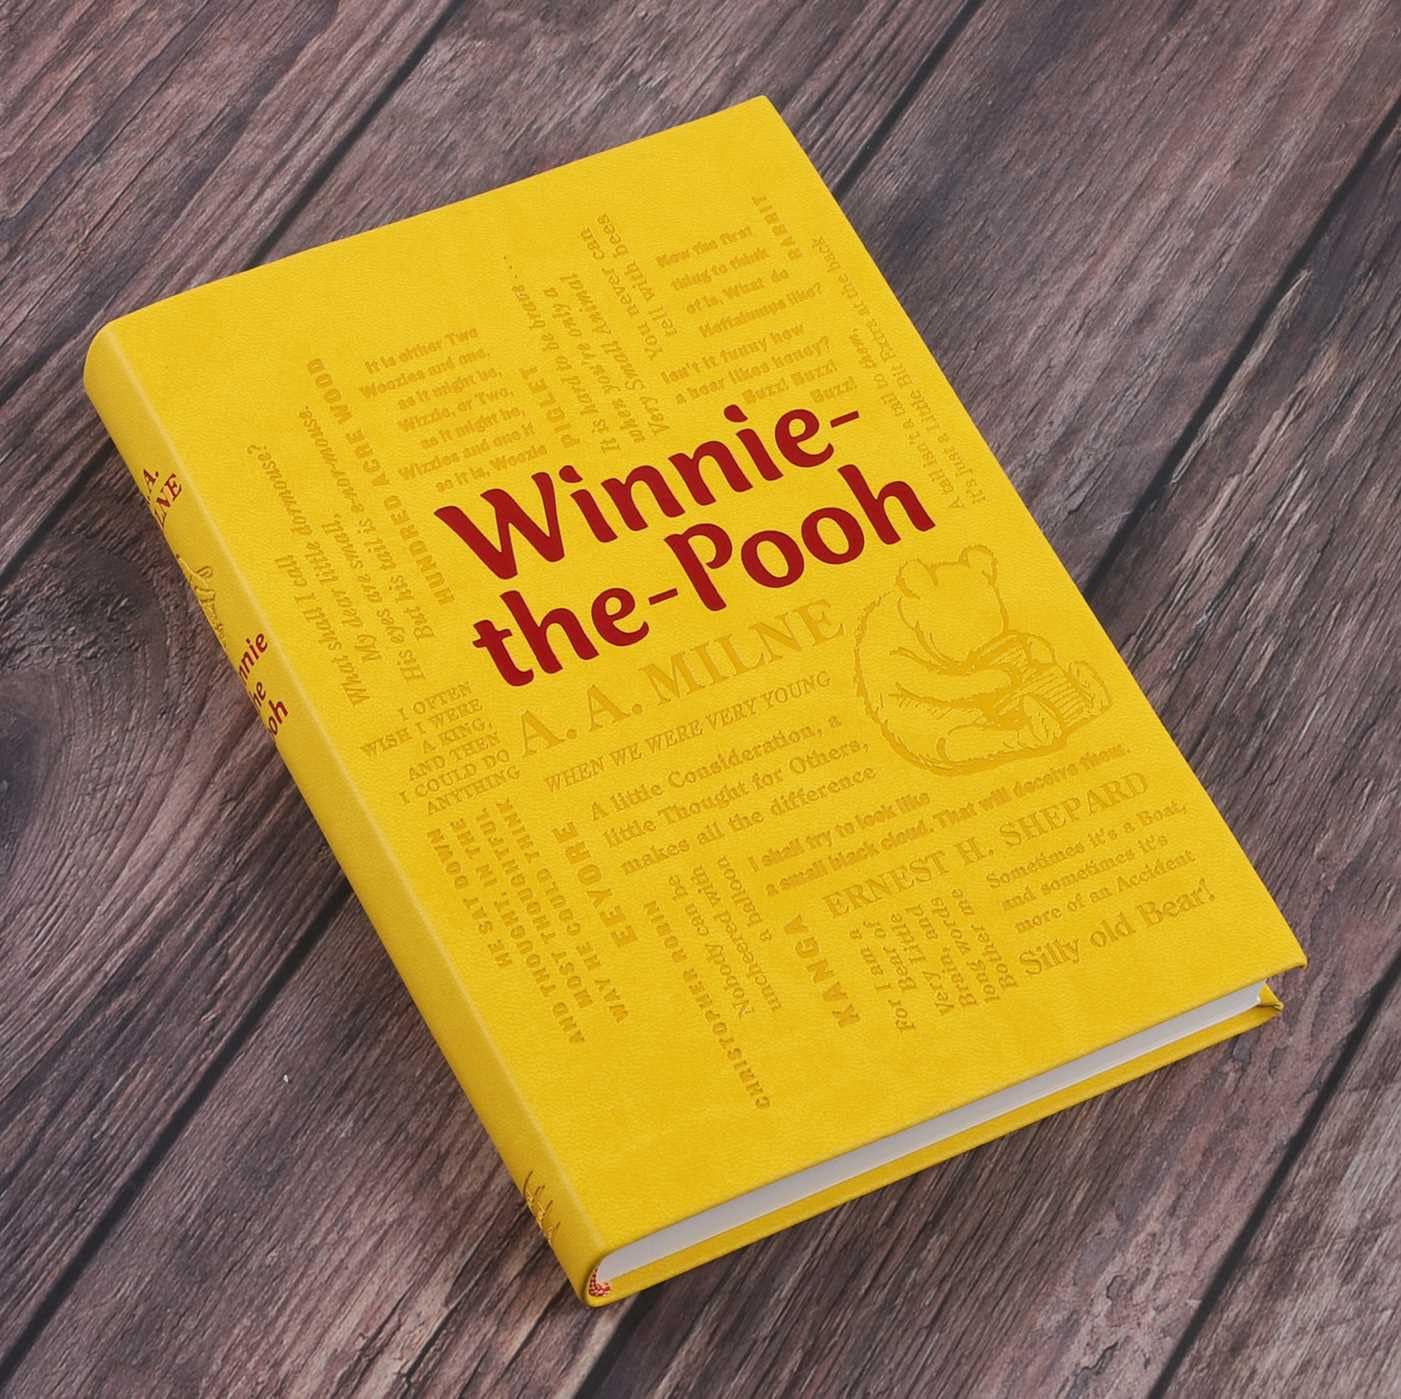 Winnie-the-Pooh (Word Cloud Classics)